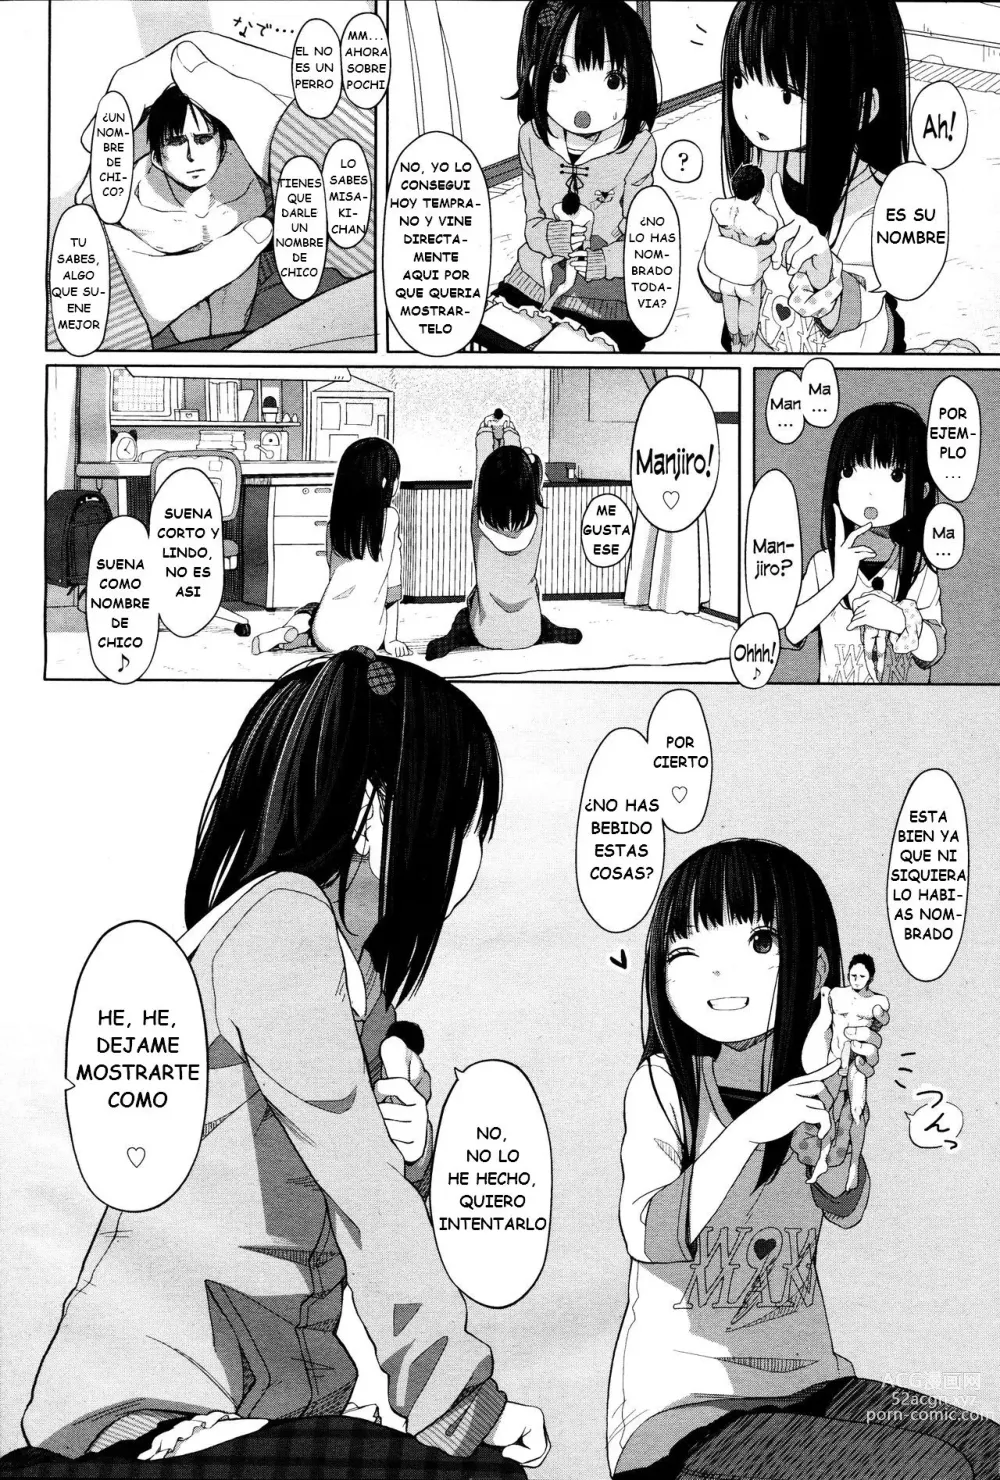 Page 4 of manga Tiny Titan